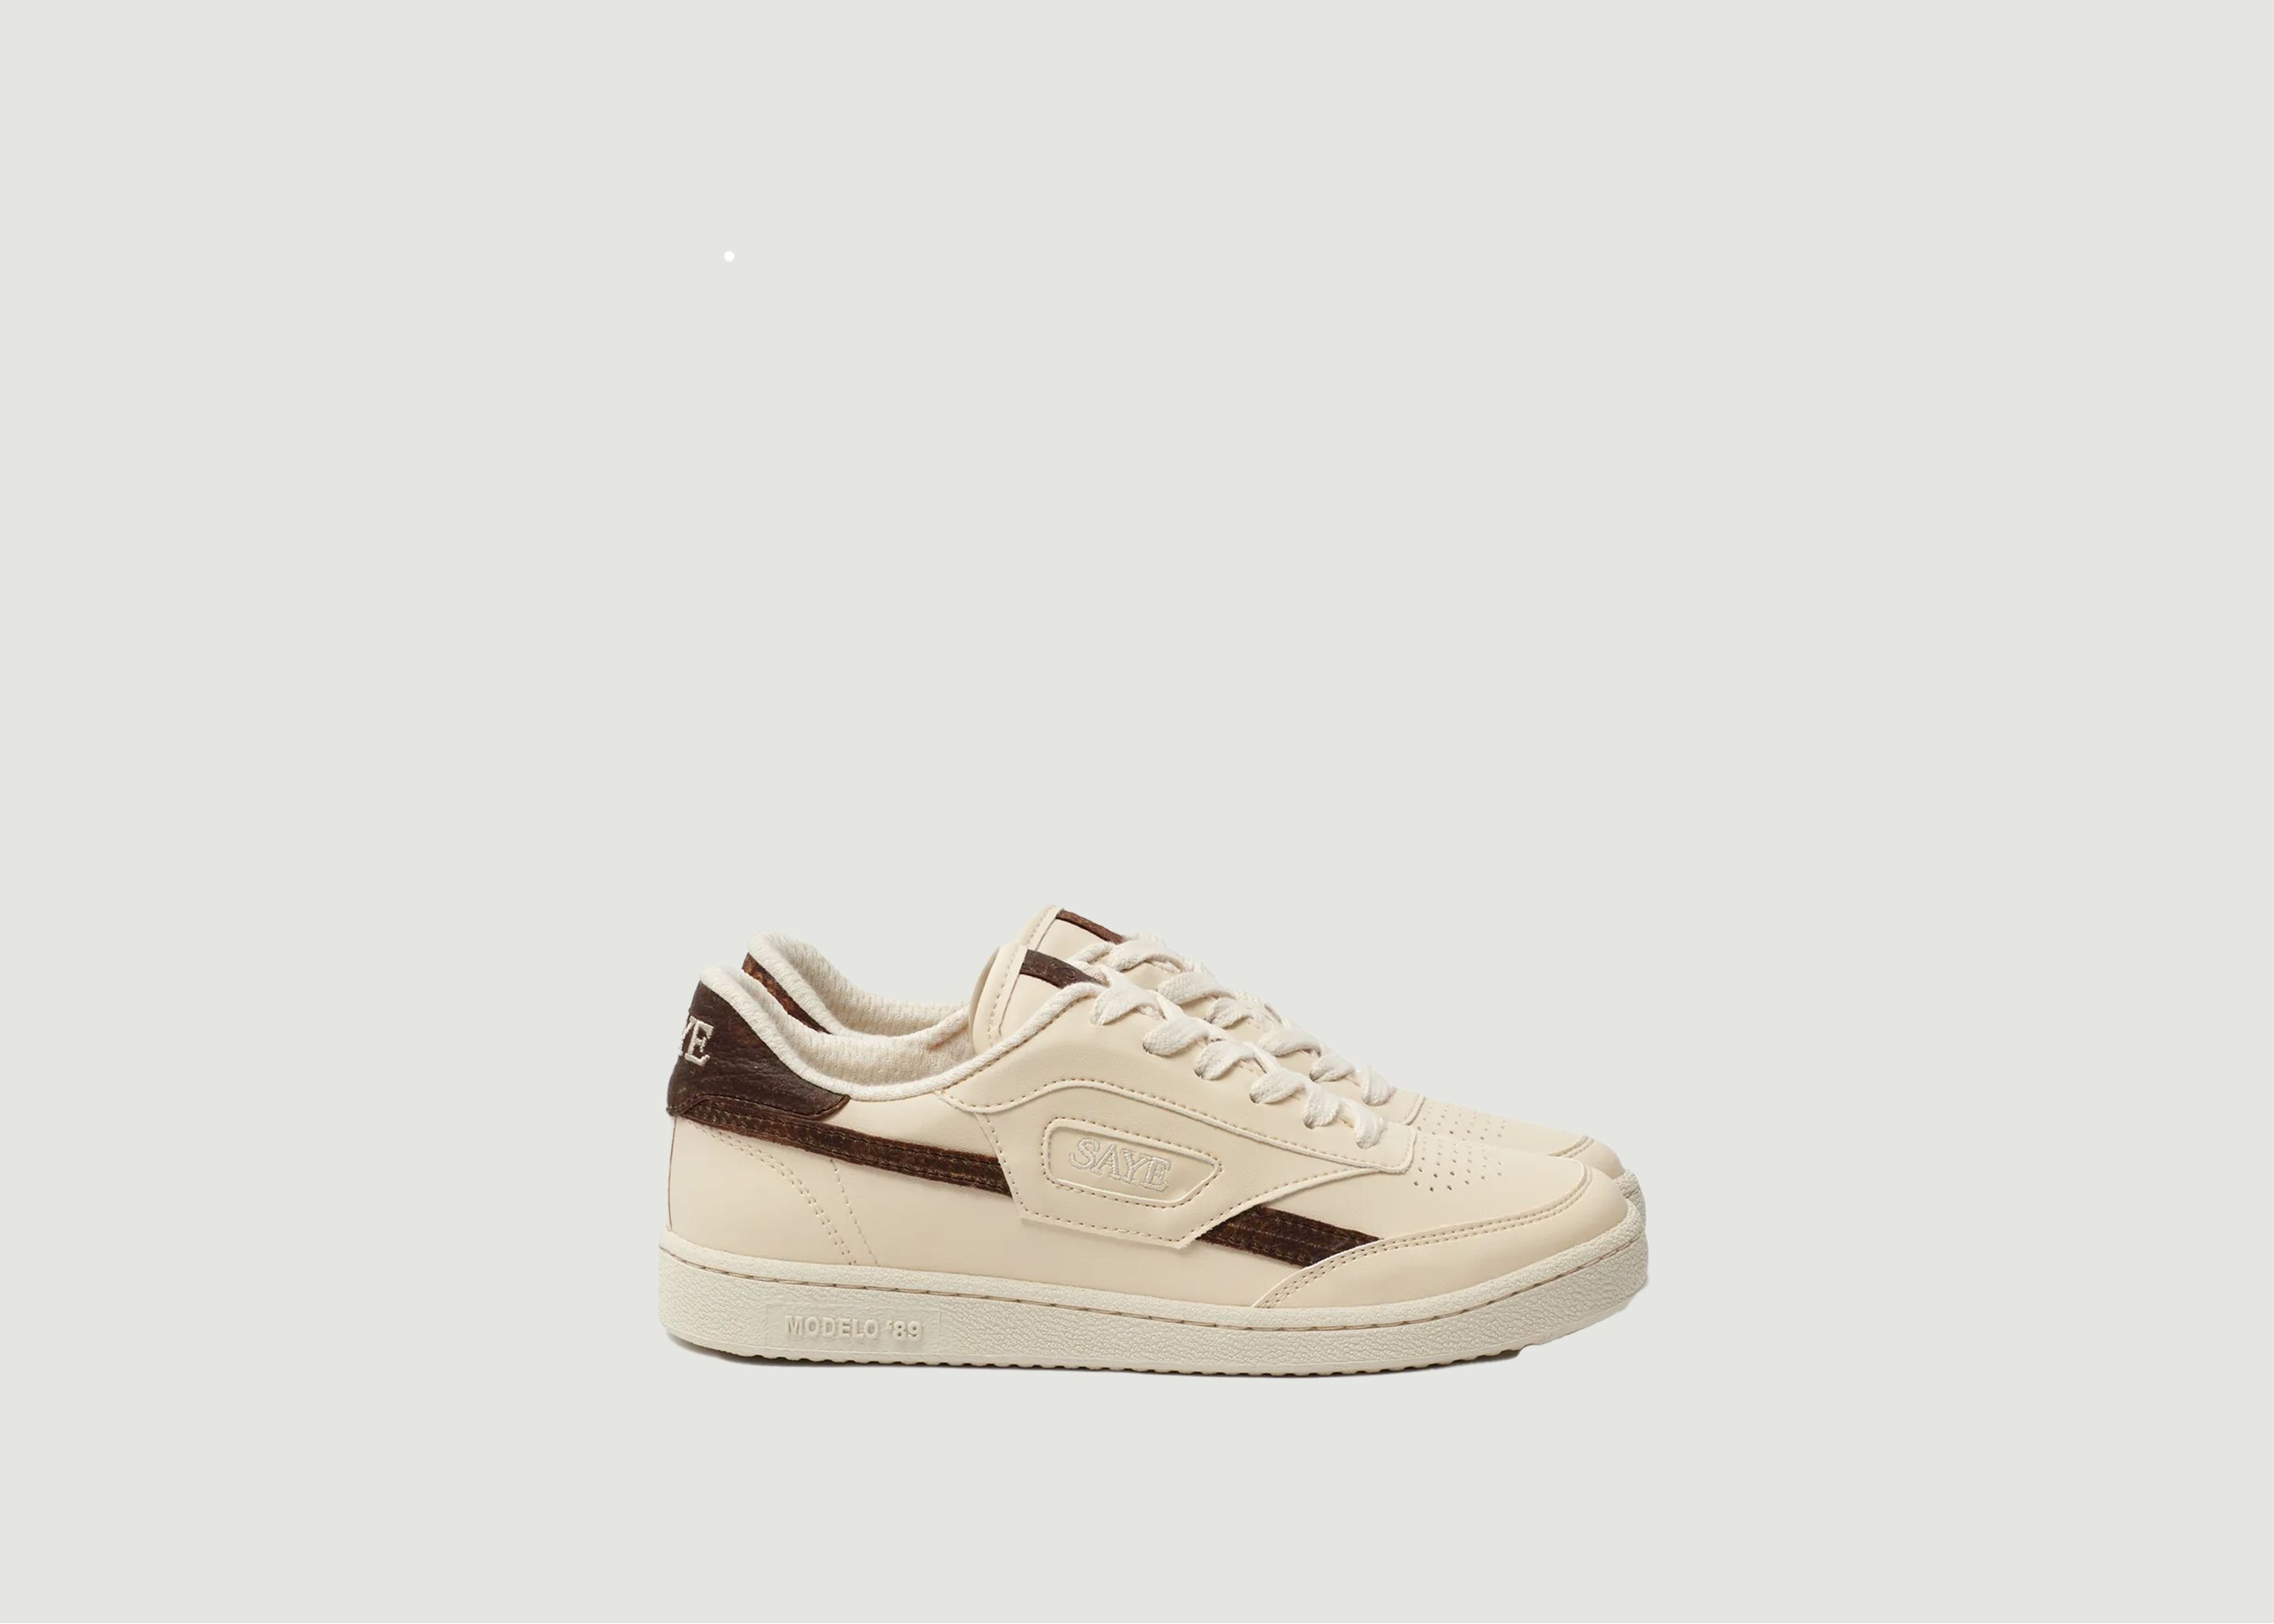 Low Sneakers in mango leather Modelo 89 - Saye